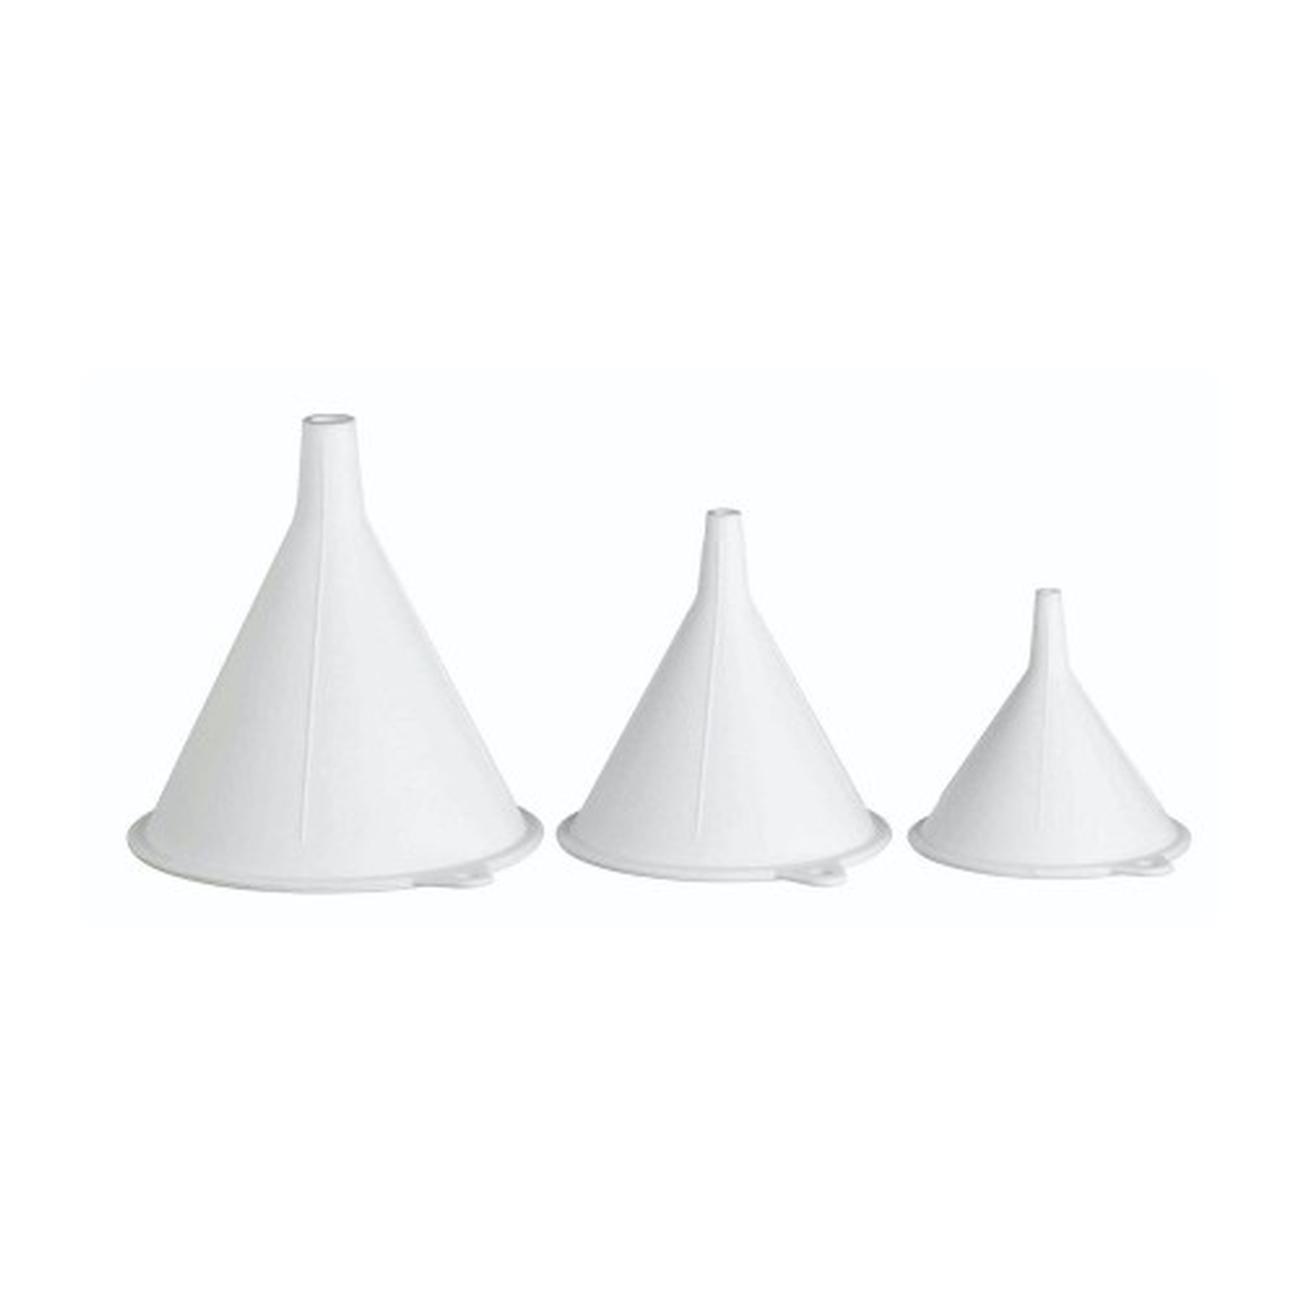 kc-set-of-3-polypropylene-funnels  - KitchenCraft Set of 3 Polypropylene Food Safe Funnels